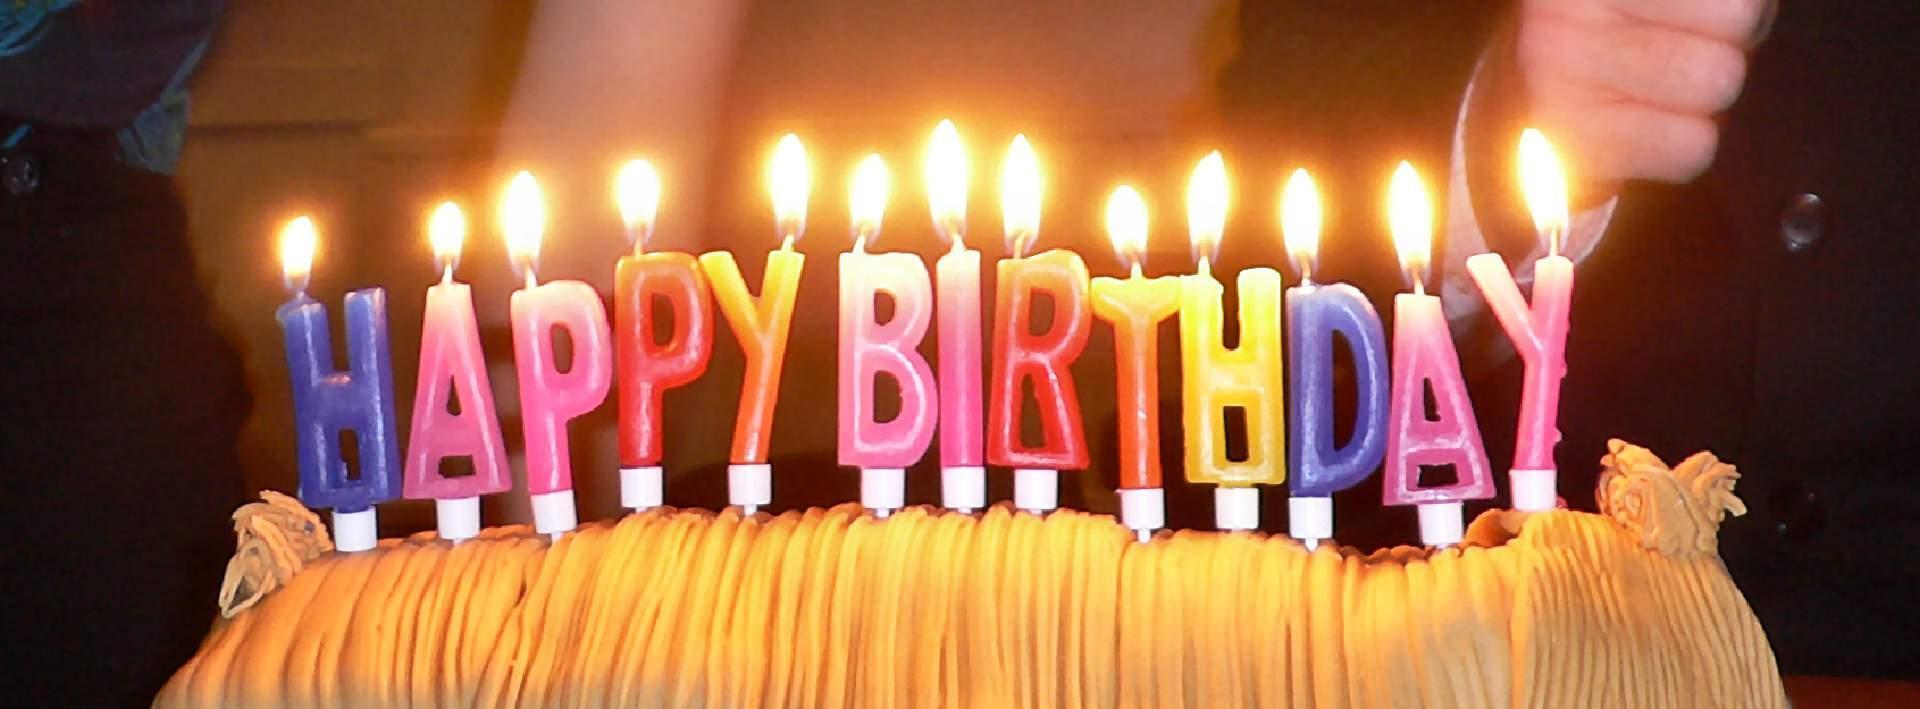 Birthday wishes greeting card free desktop background